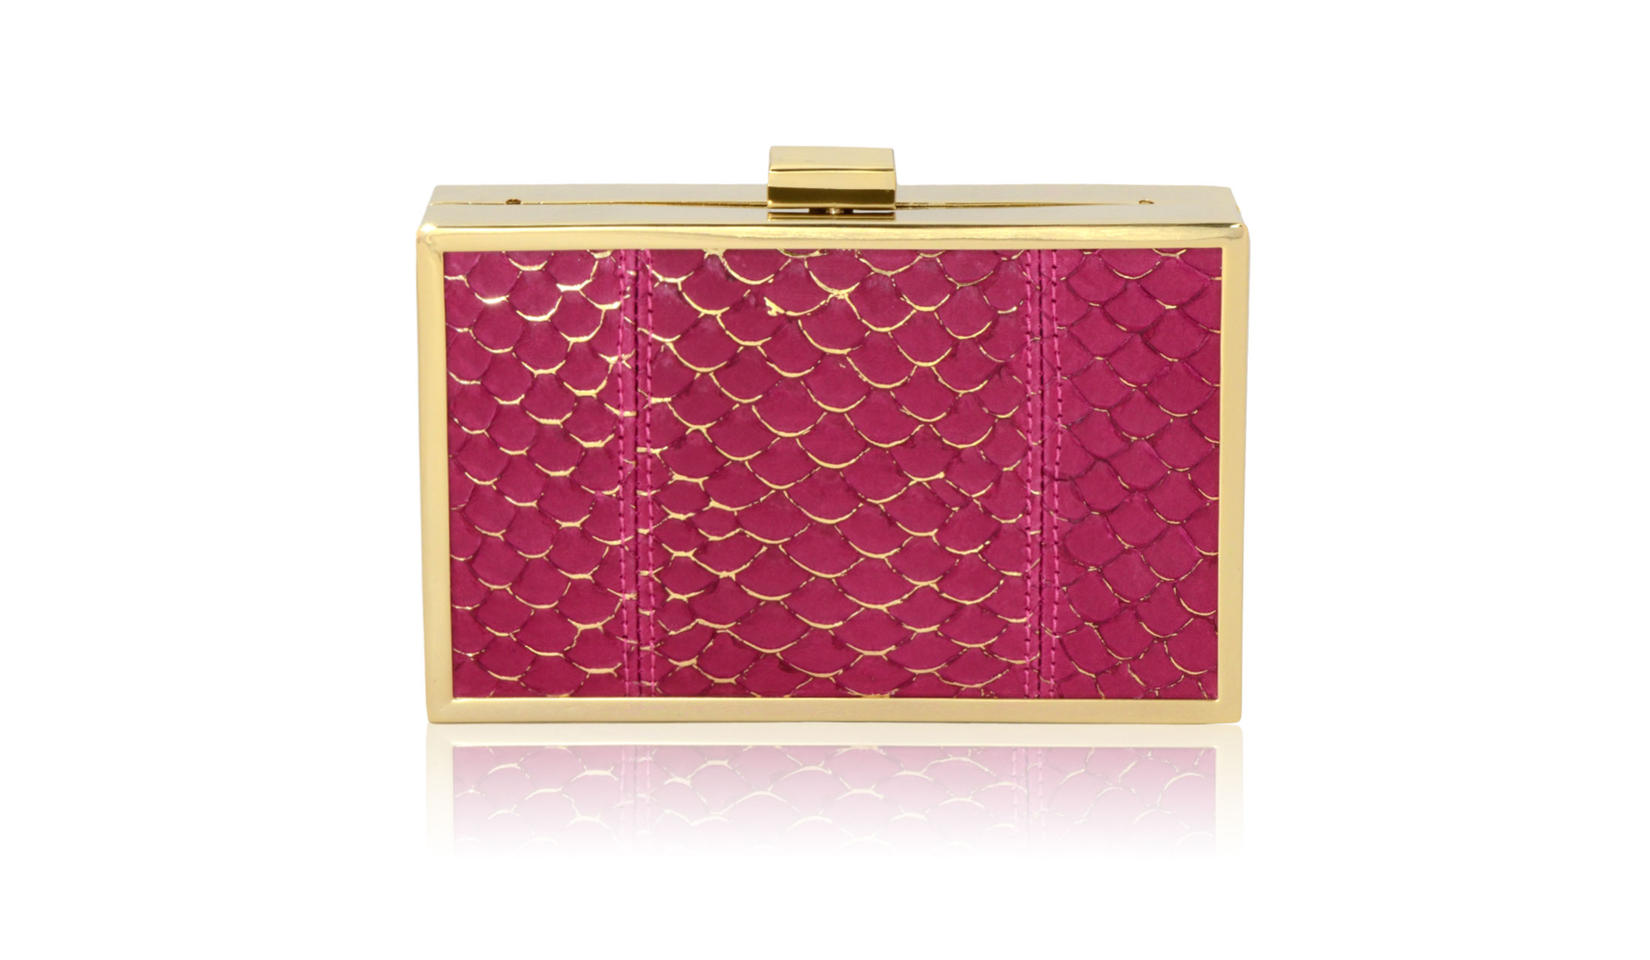 crc-188-sr-sangria-pink-corsica-minaudiere-stylish-clutch-exotic-gold-accented-handbag